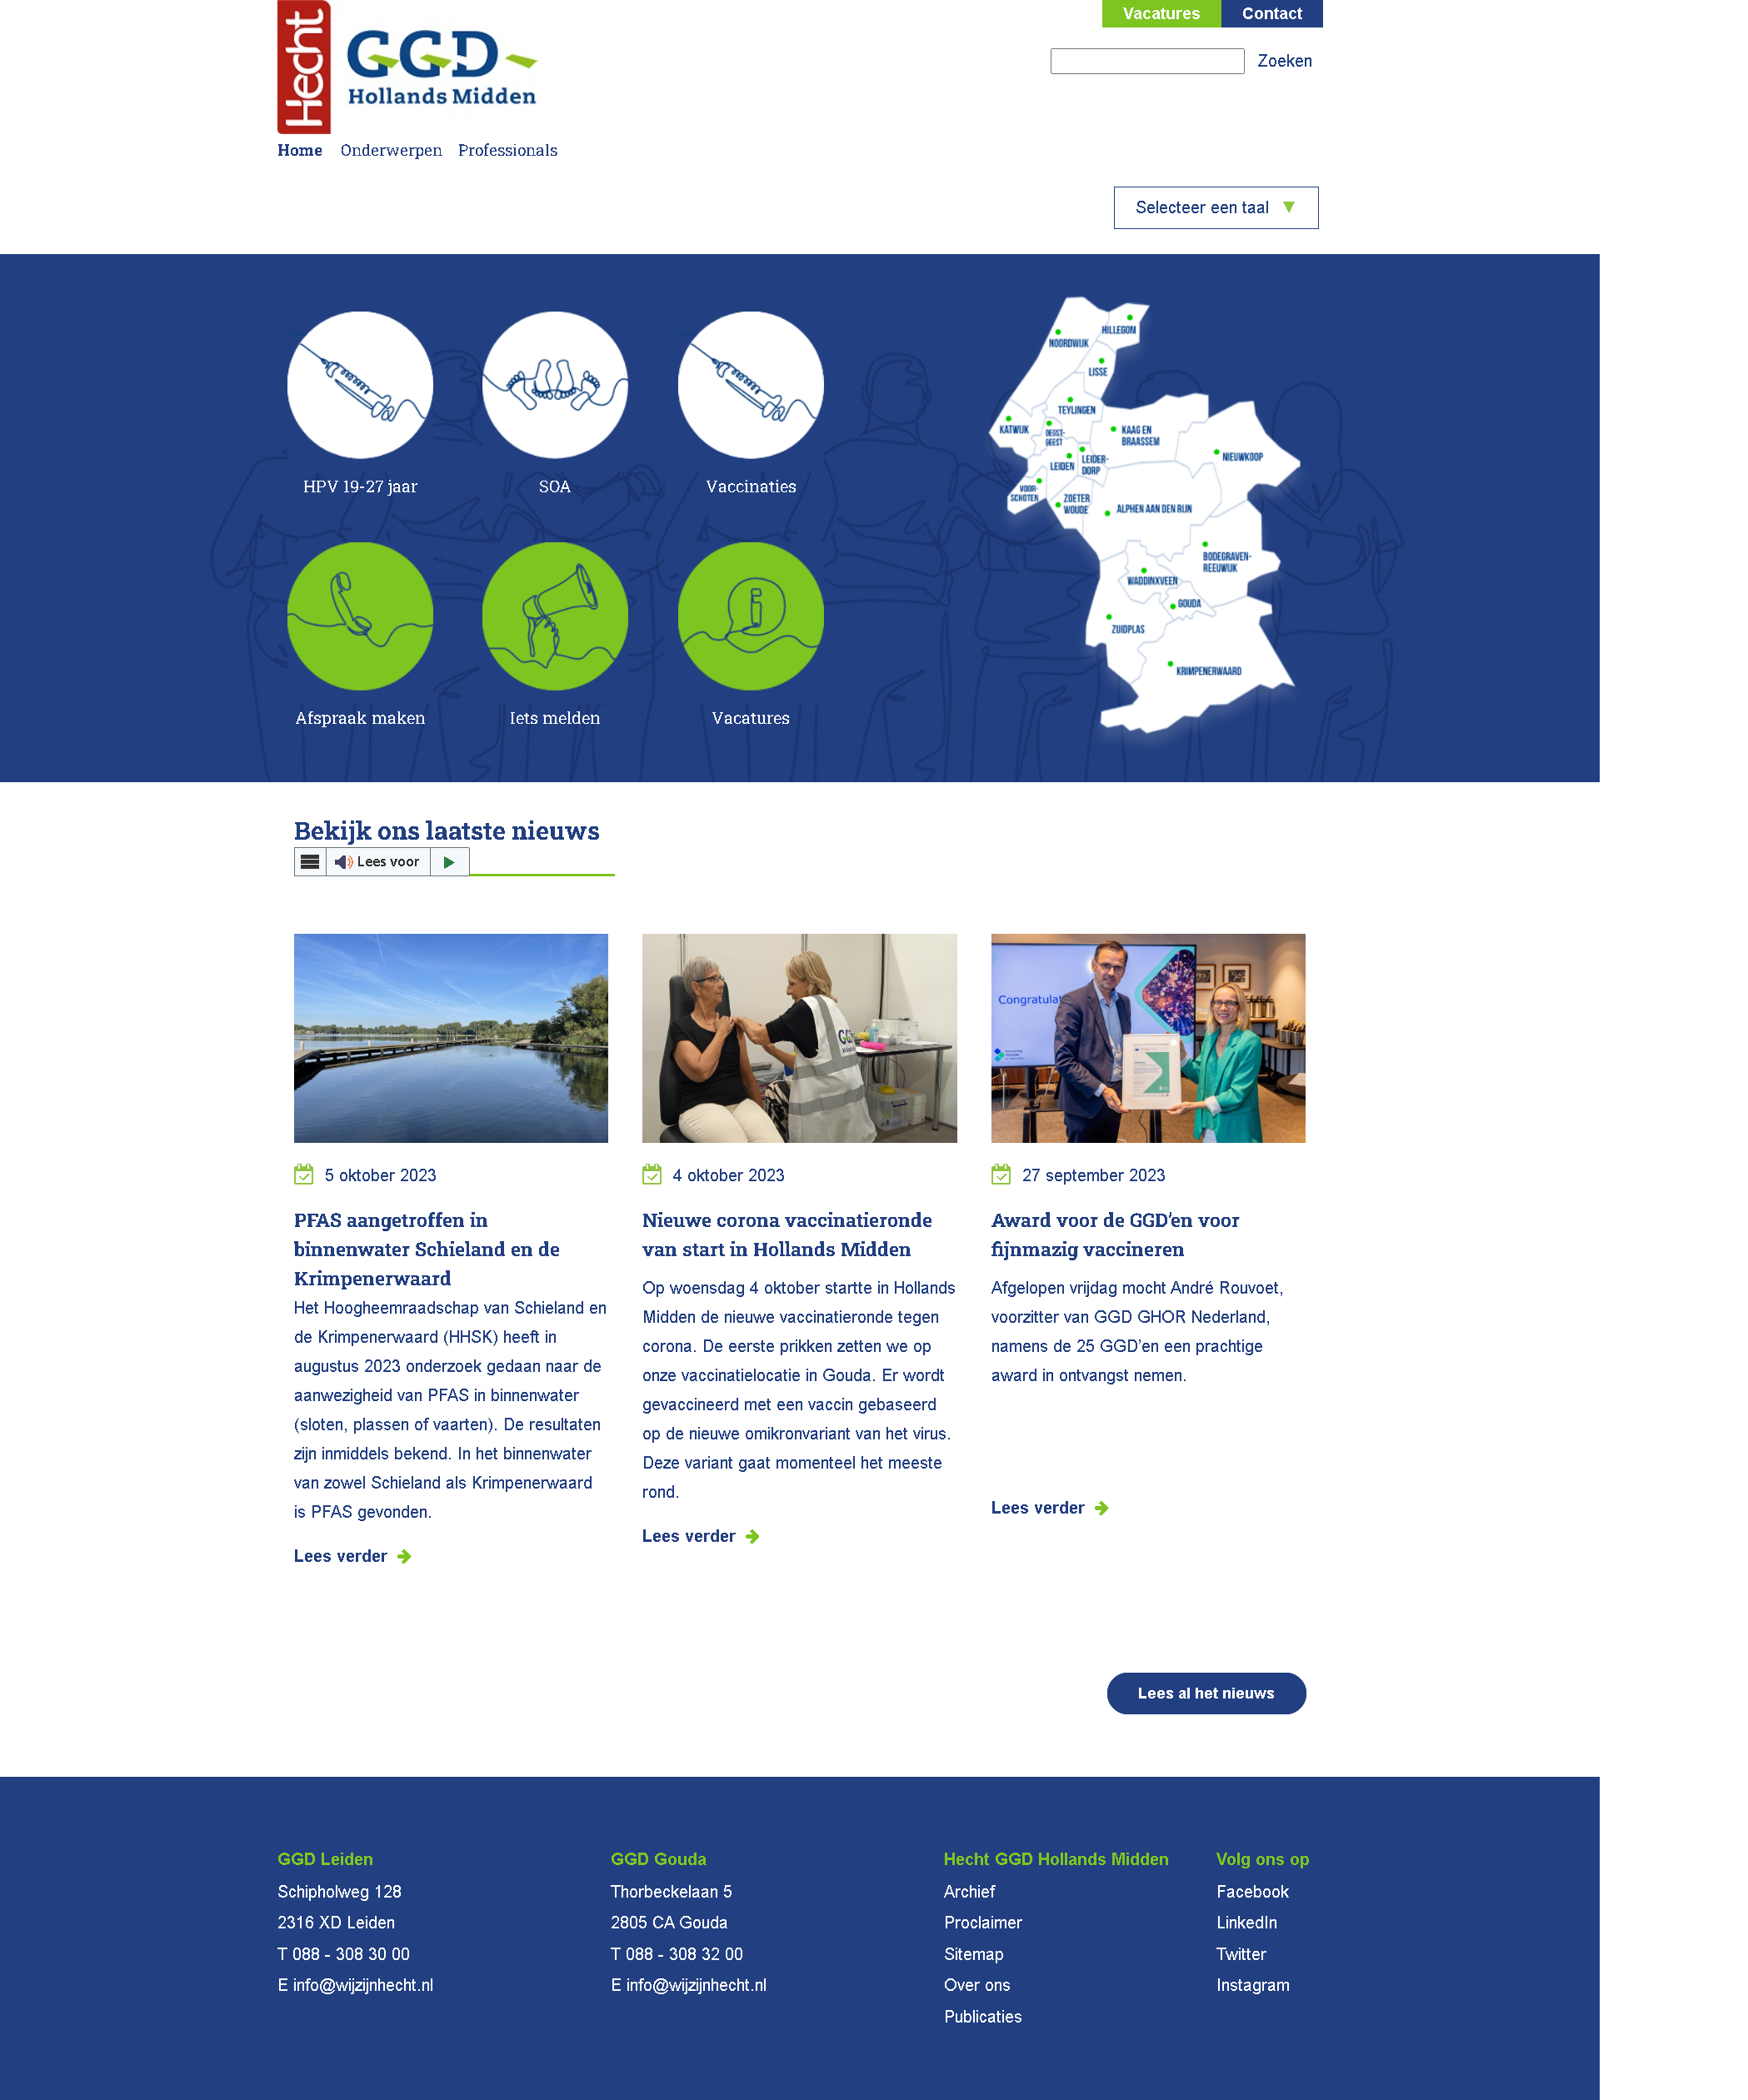 GGD Hollands MiddenAFAS OutSite website case